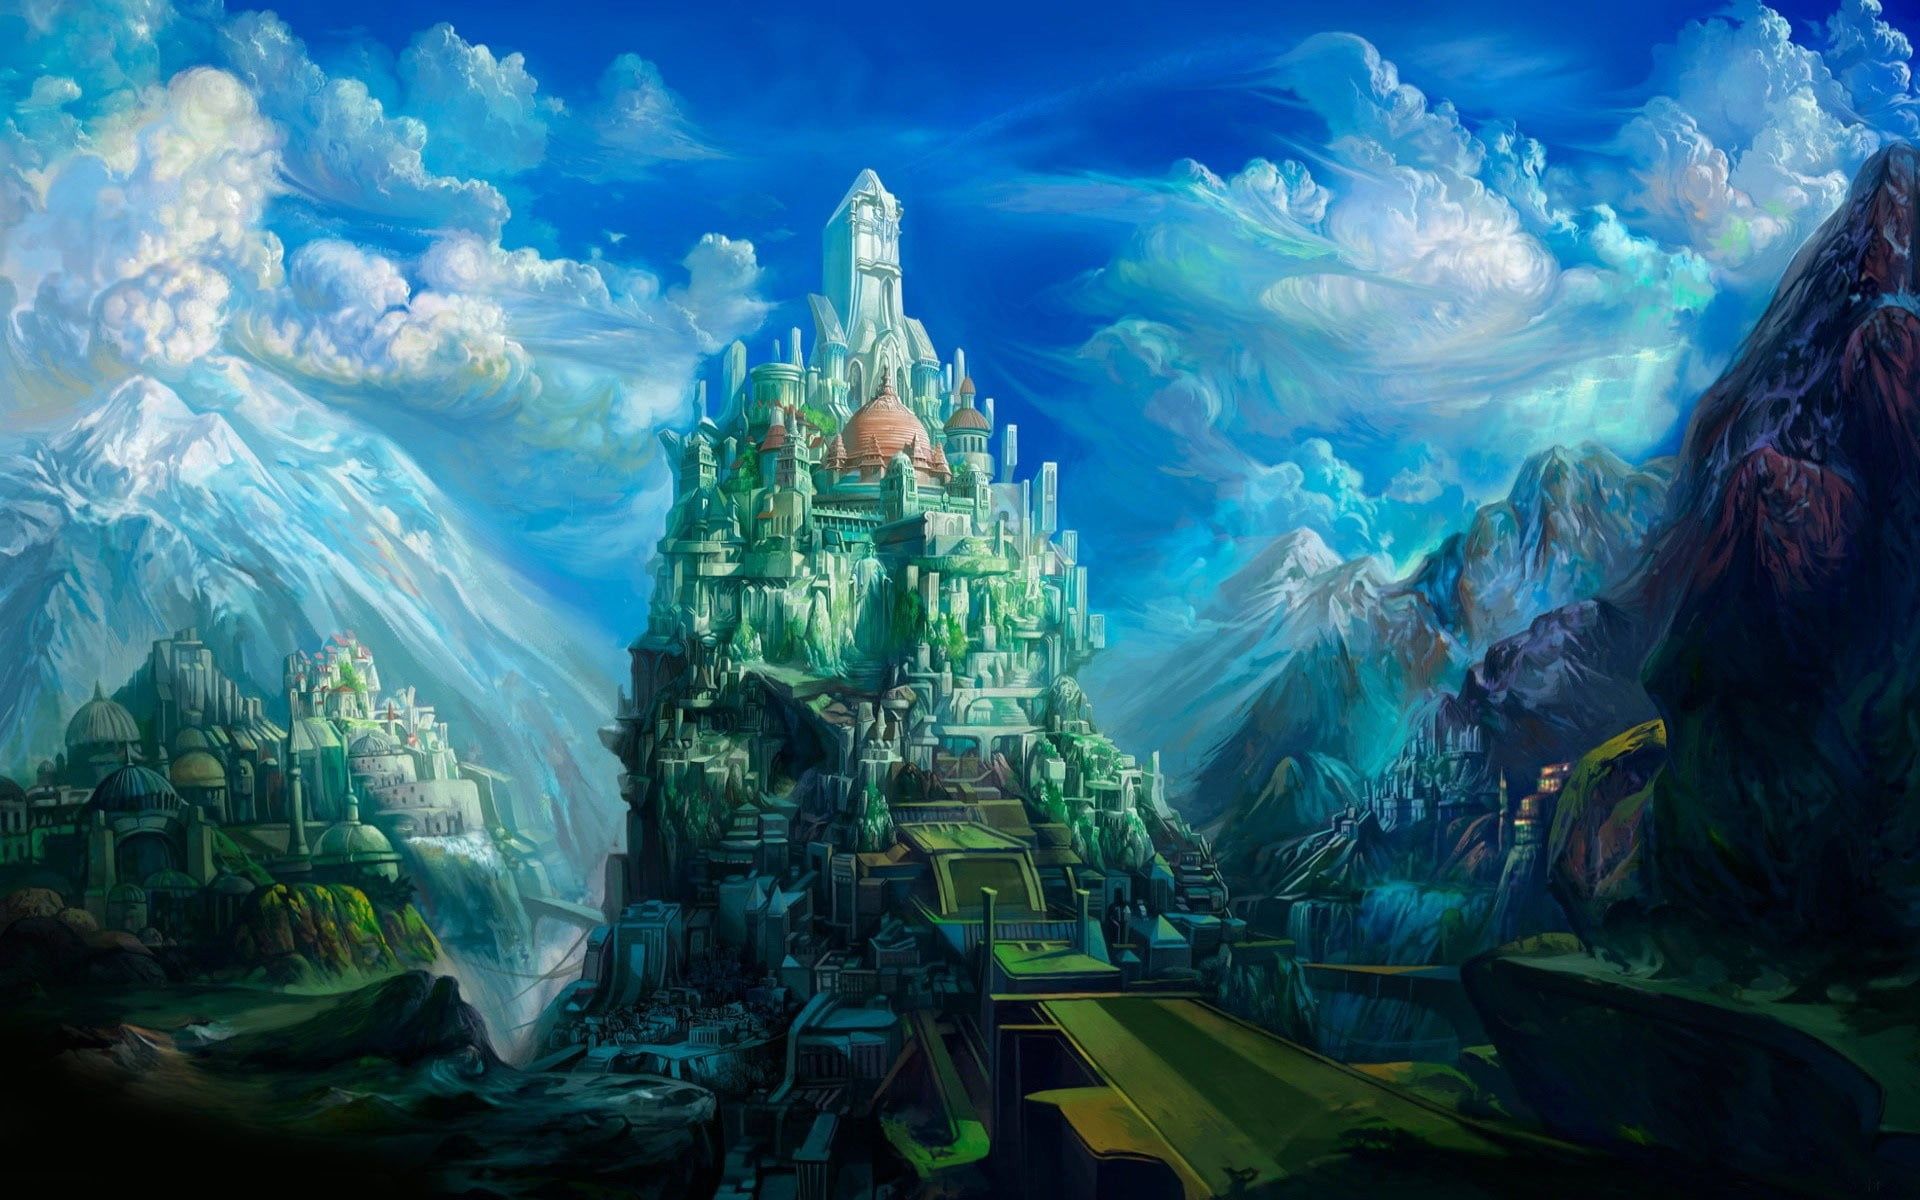 Mountain castle artwork HD wallpaper free download